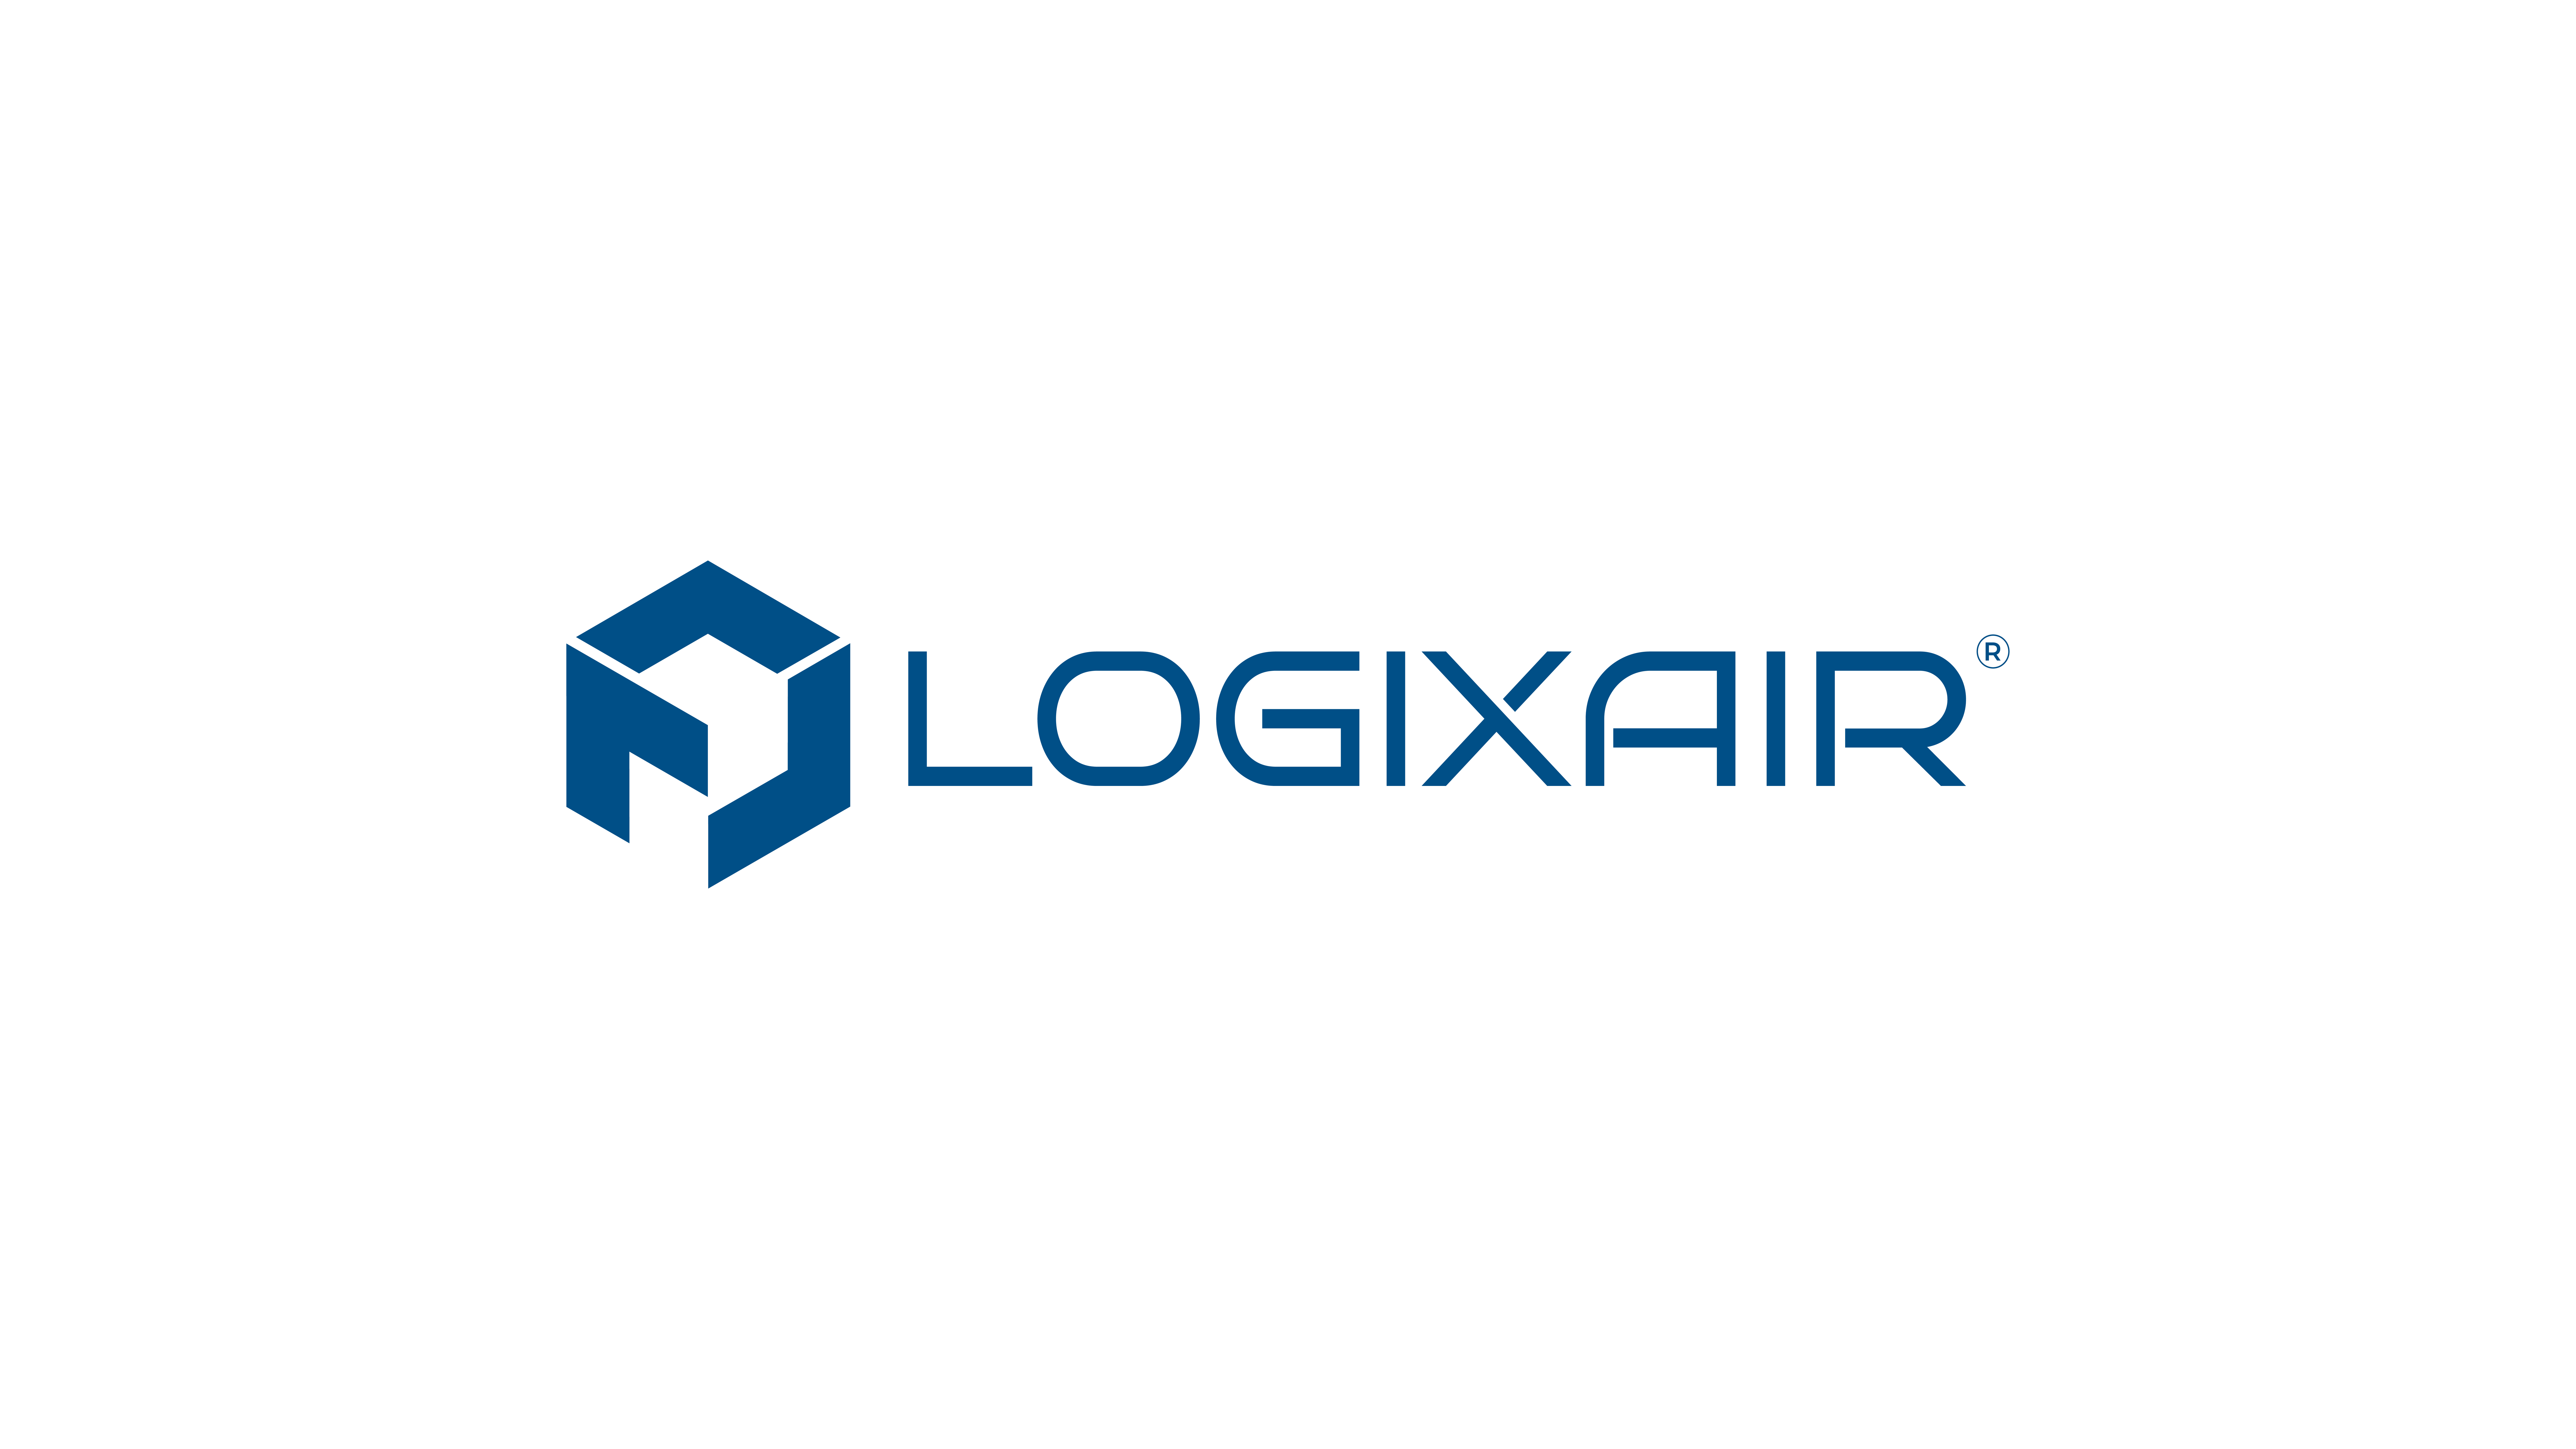 Brand Identity Design for Cargo Drone Startup - Branding & Positioning